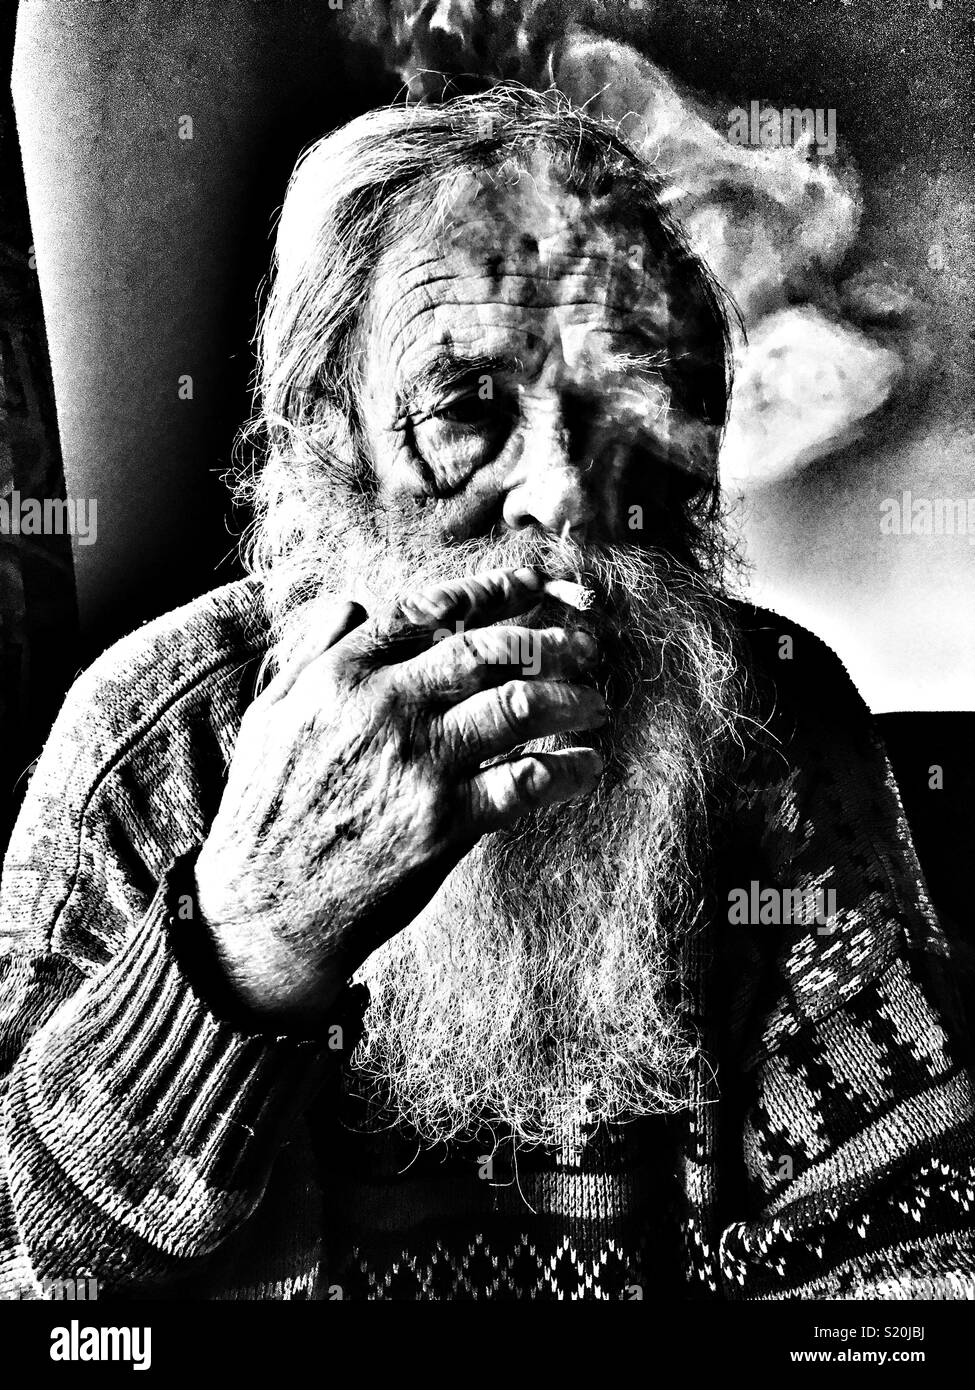 Elderly man smoking a cigarette Stock Photo